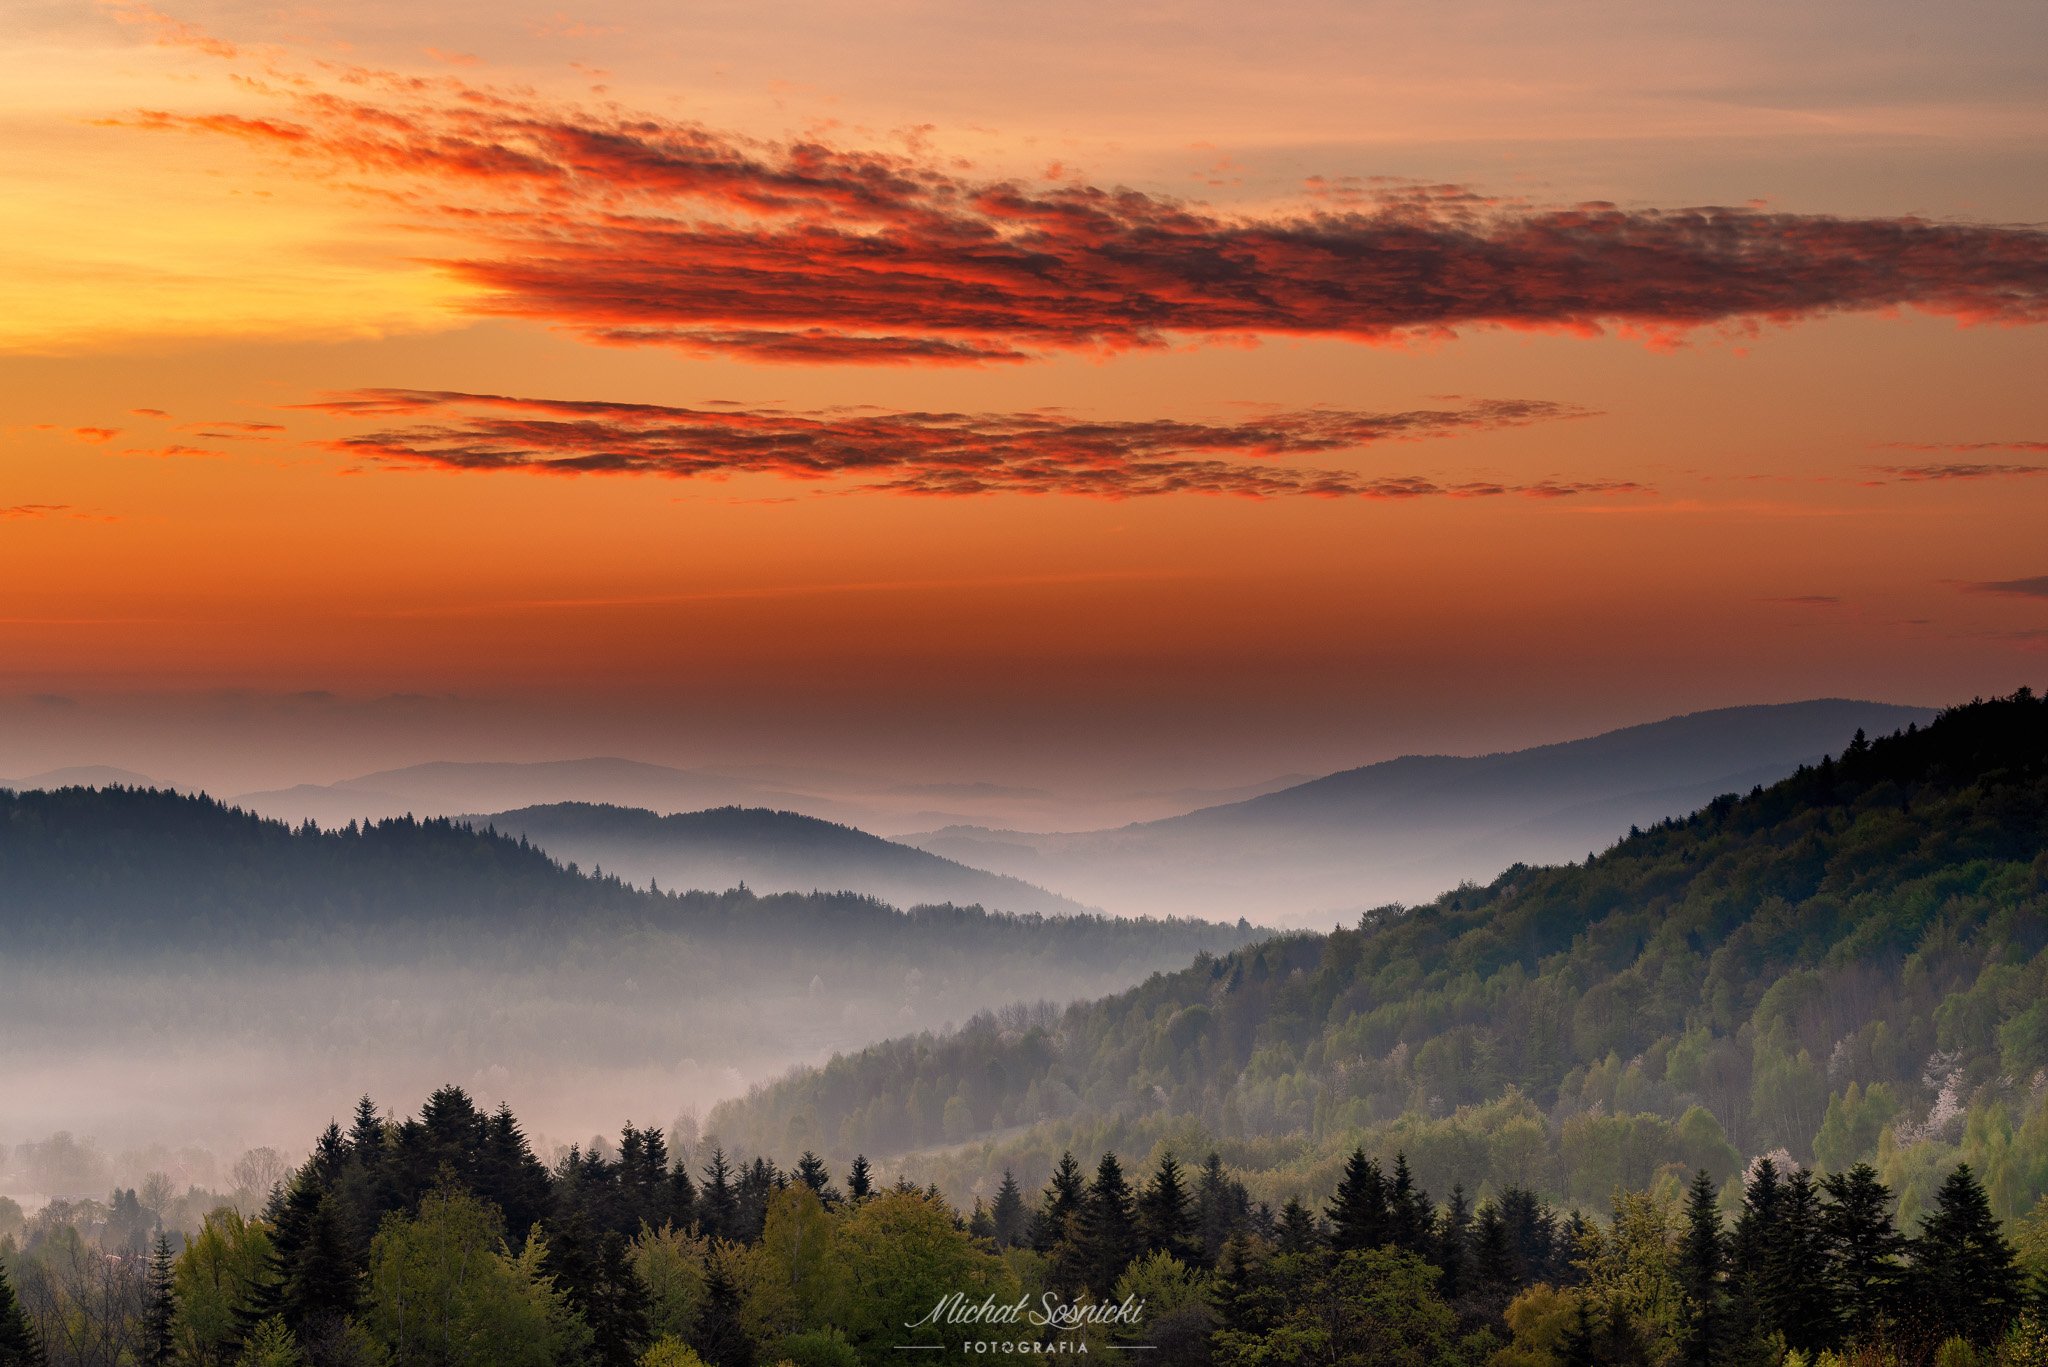 #zawoja #poland #landscape #sky #fire #color #nature #pentax #benro, Michał Sośnicki